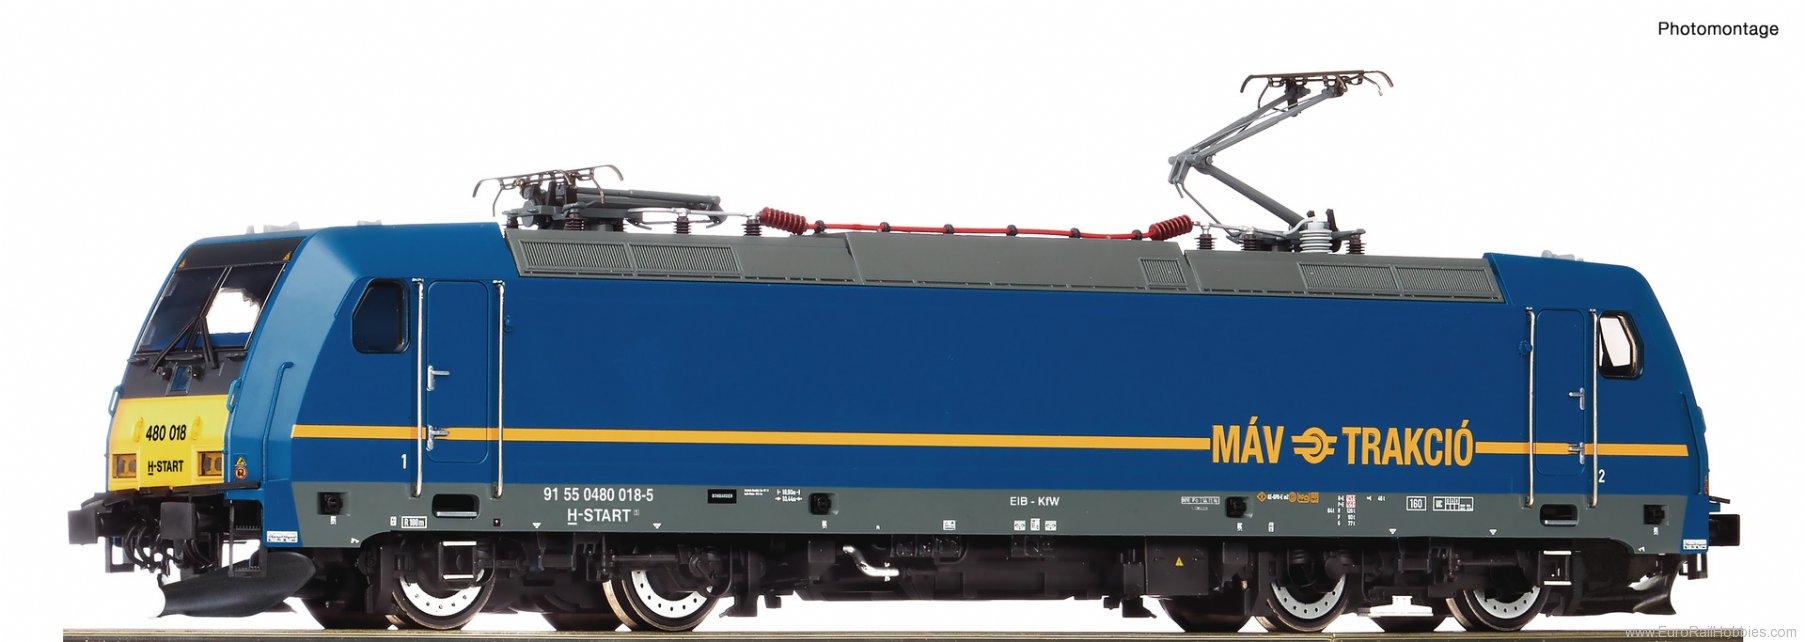 Roco 73338 Electric locomotive 480 018-5, MAV (DC Analog